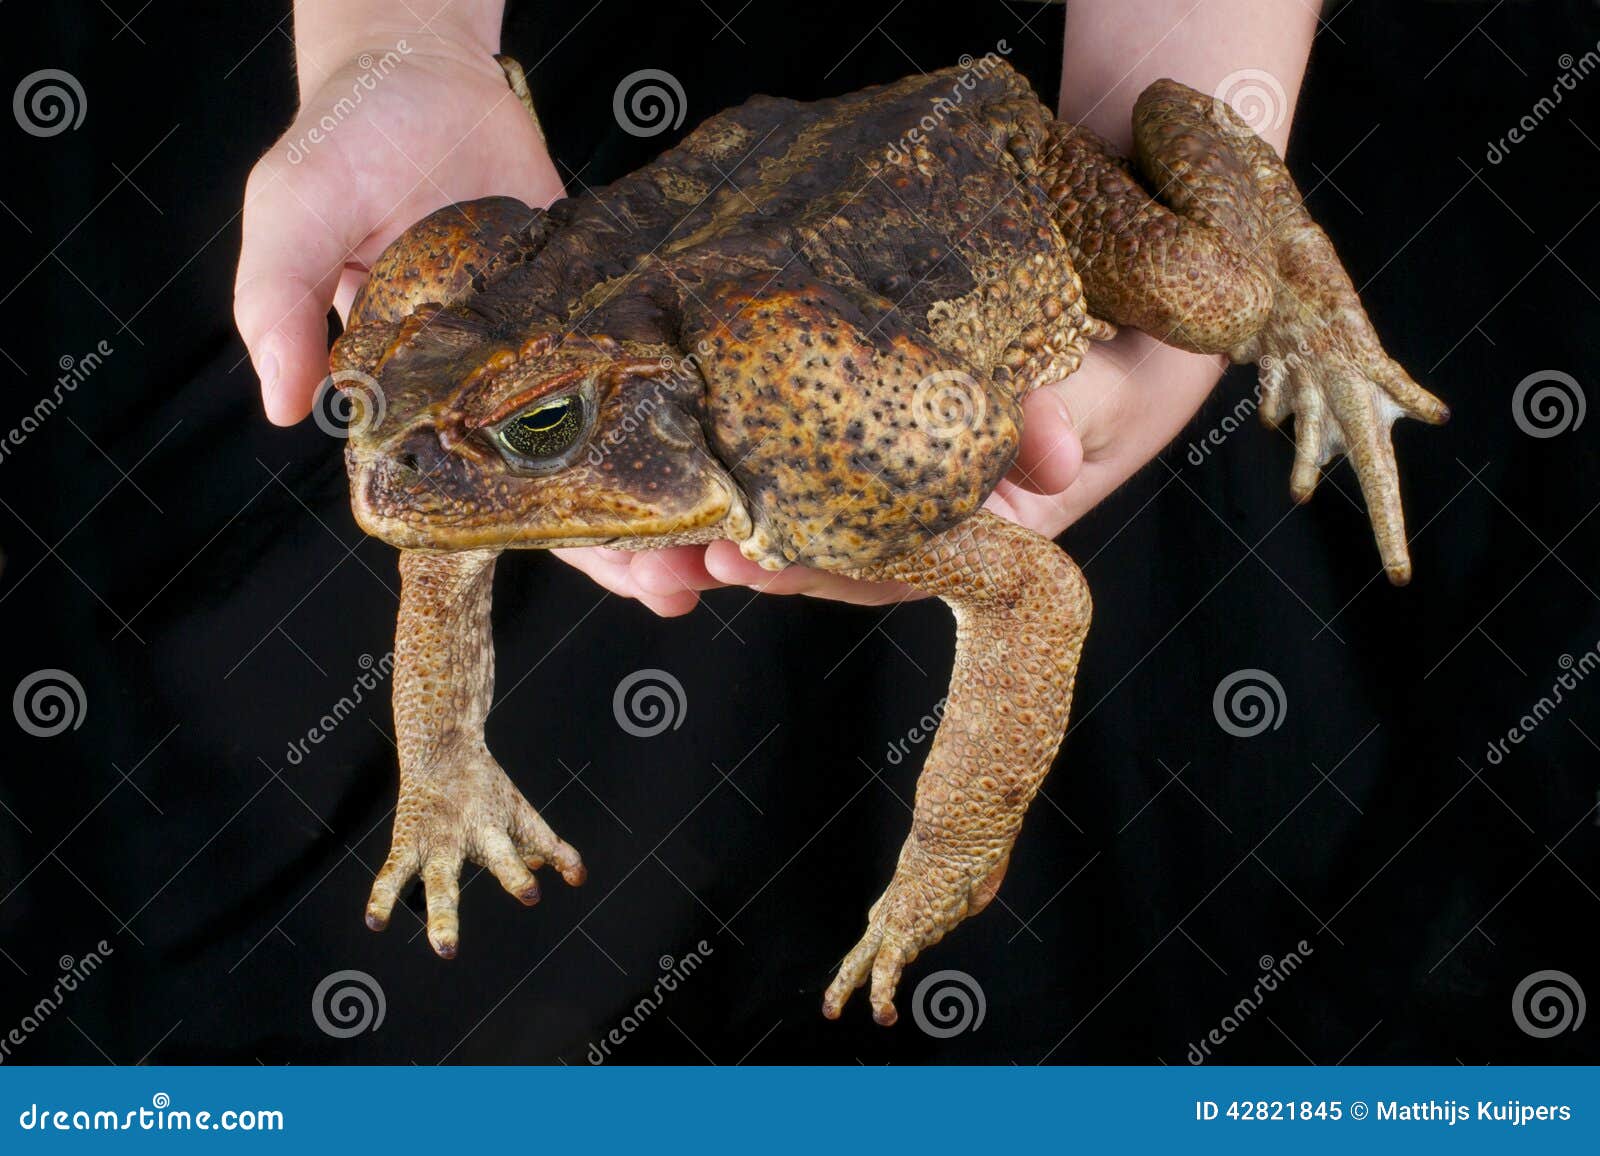 cane toad / rhinella marina